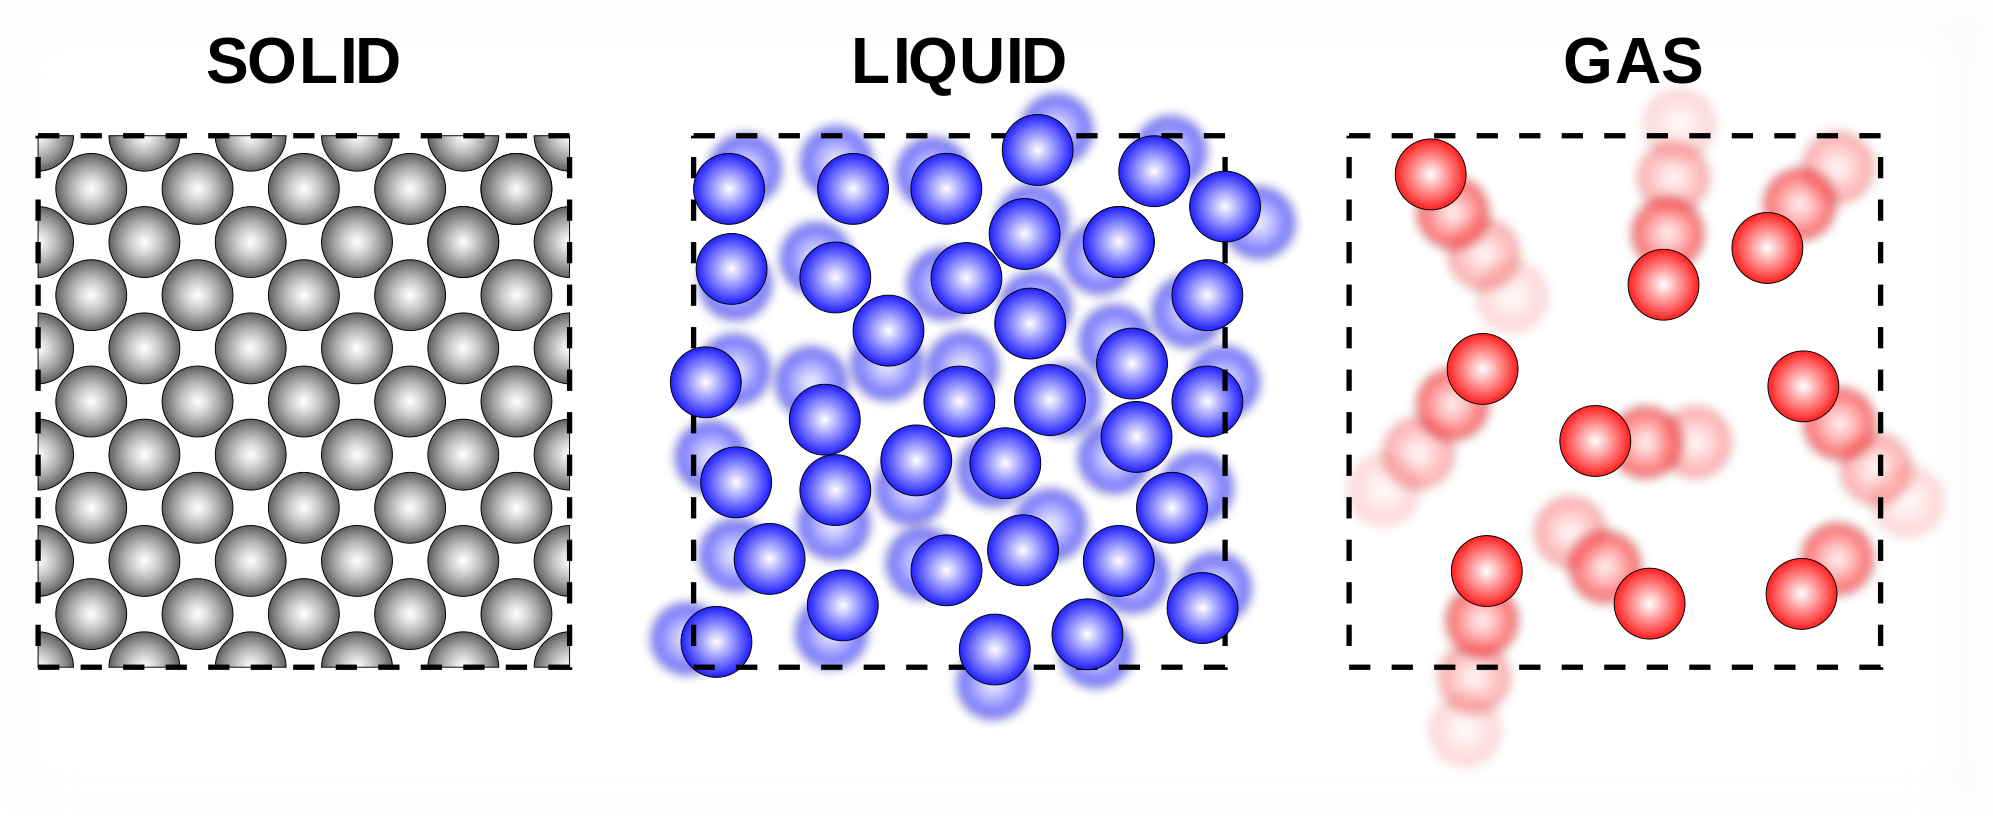 Solid Liquid Gas Png - Compressible Flow Regimes | Team Uv, Transparent background PNG HD thumbnail